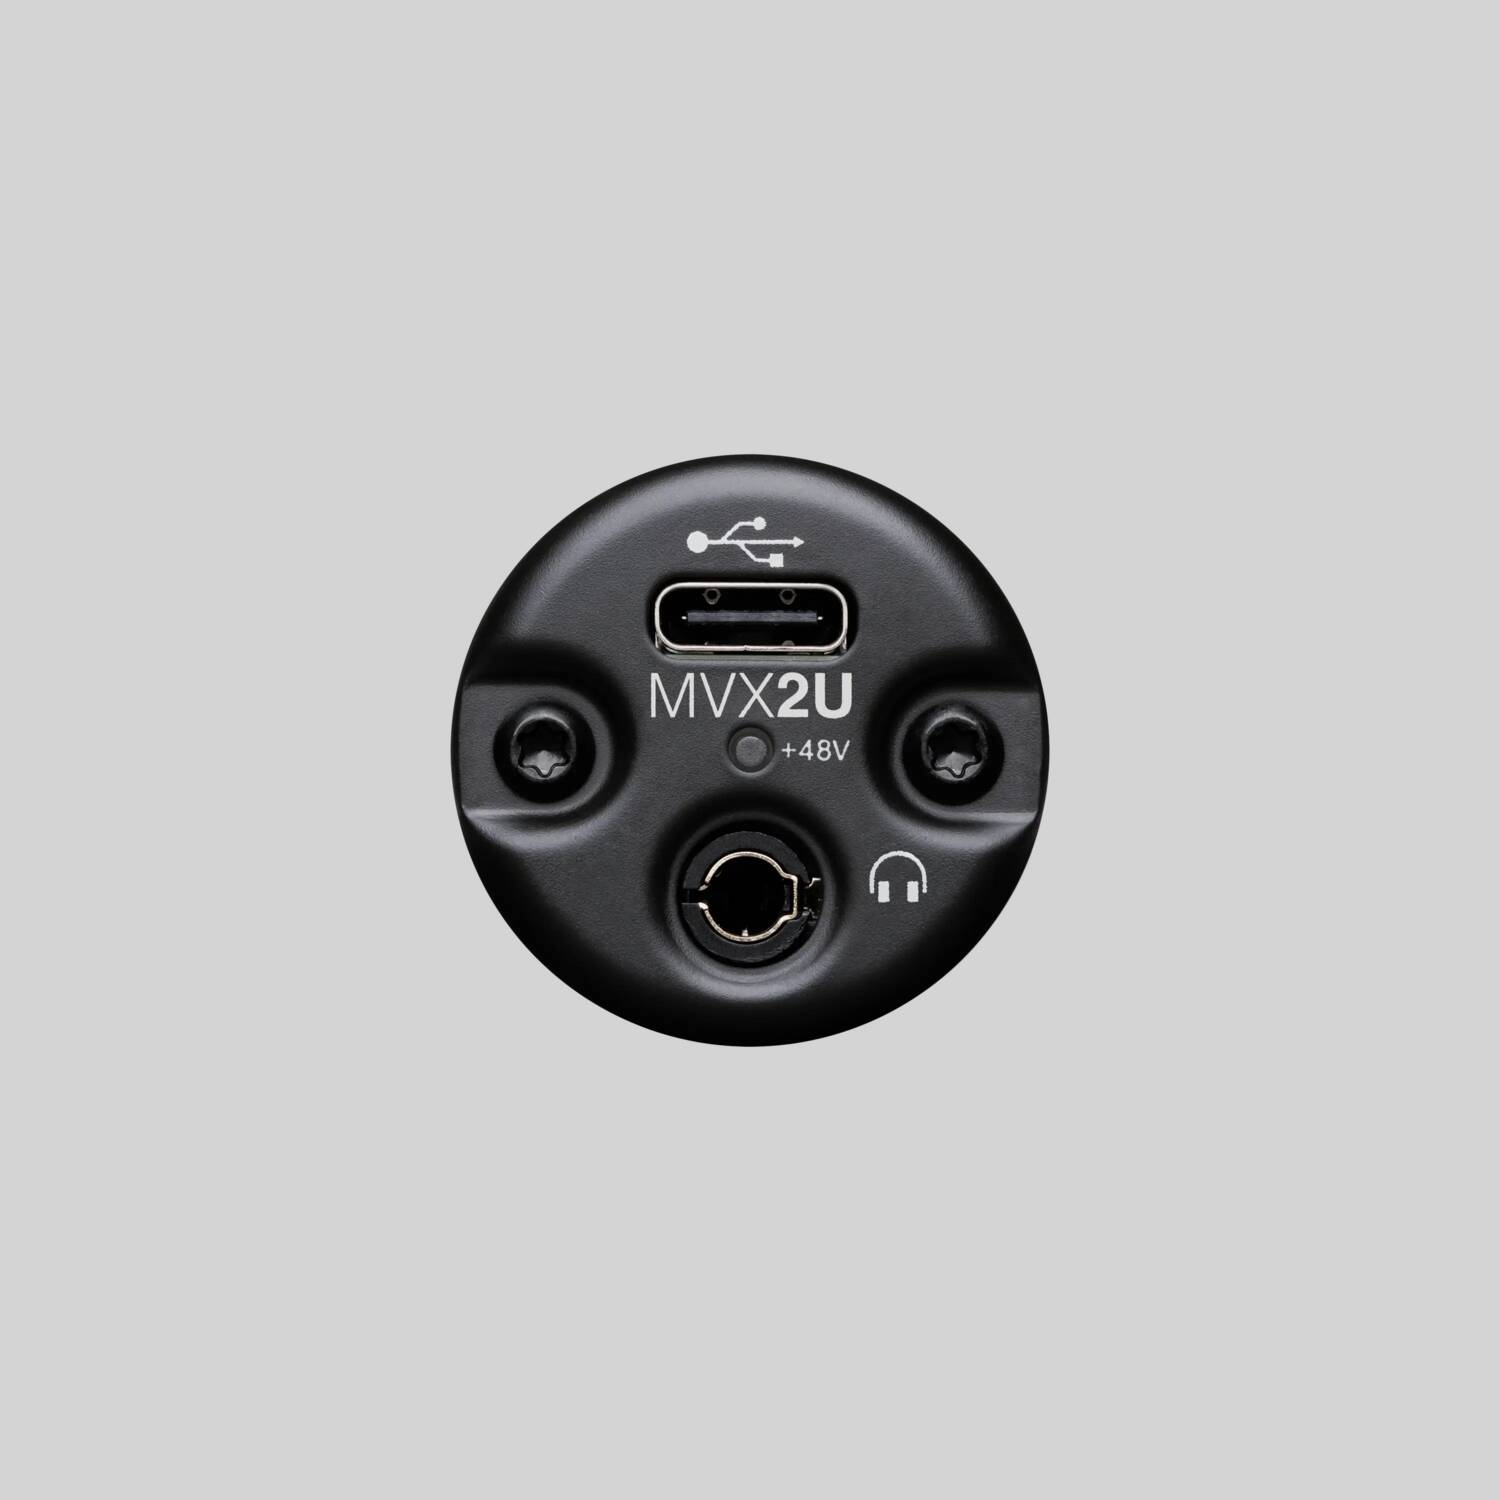 MVX2U - Digital Audio Interface - Shure USA